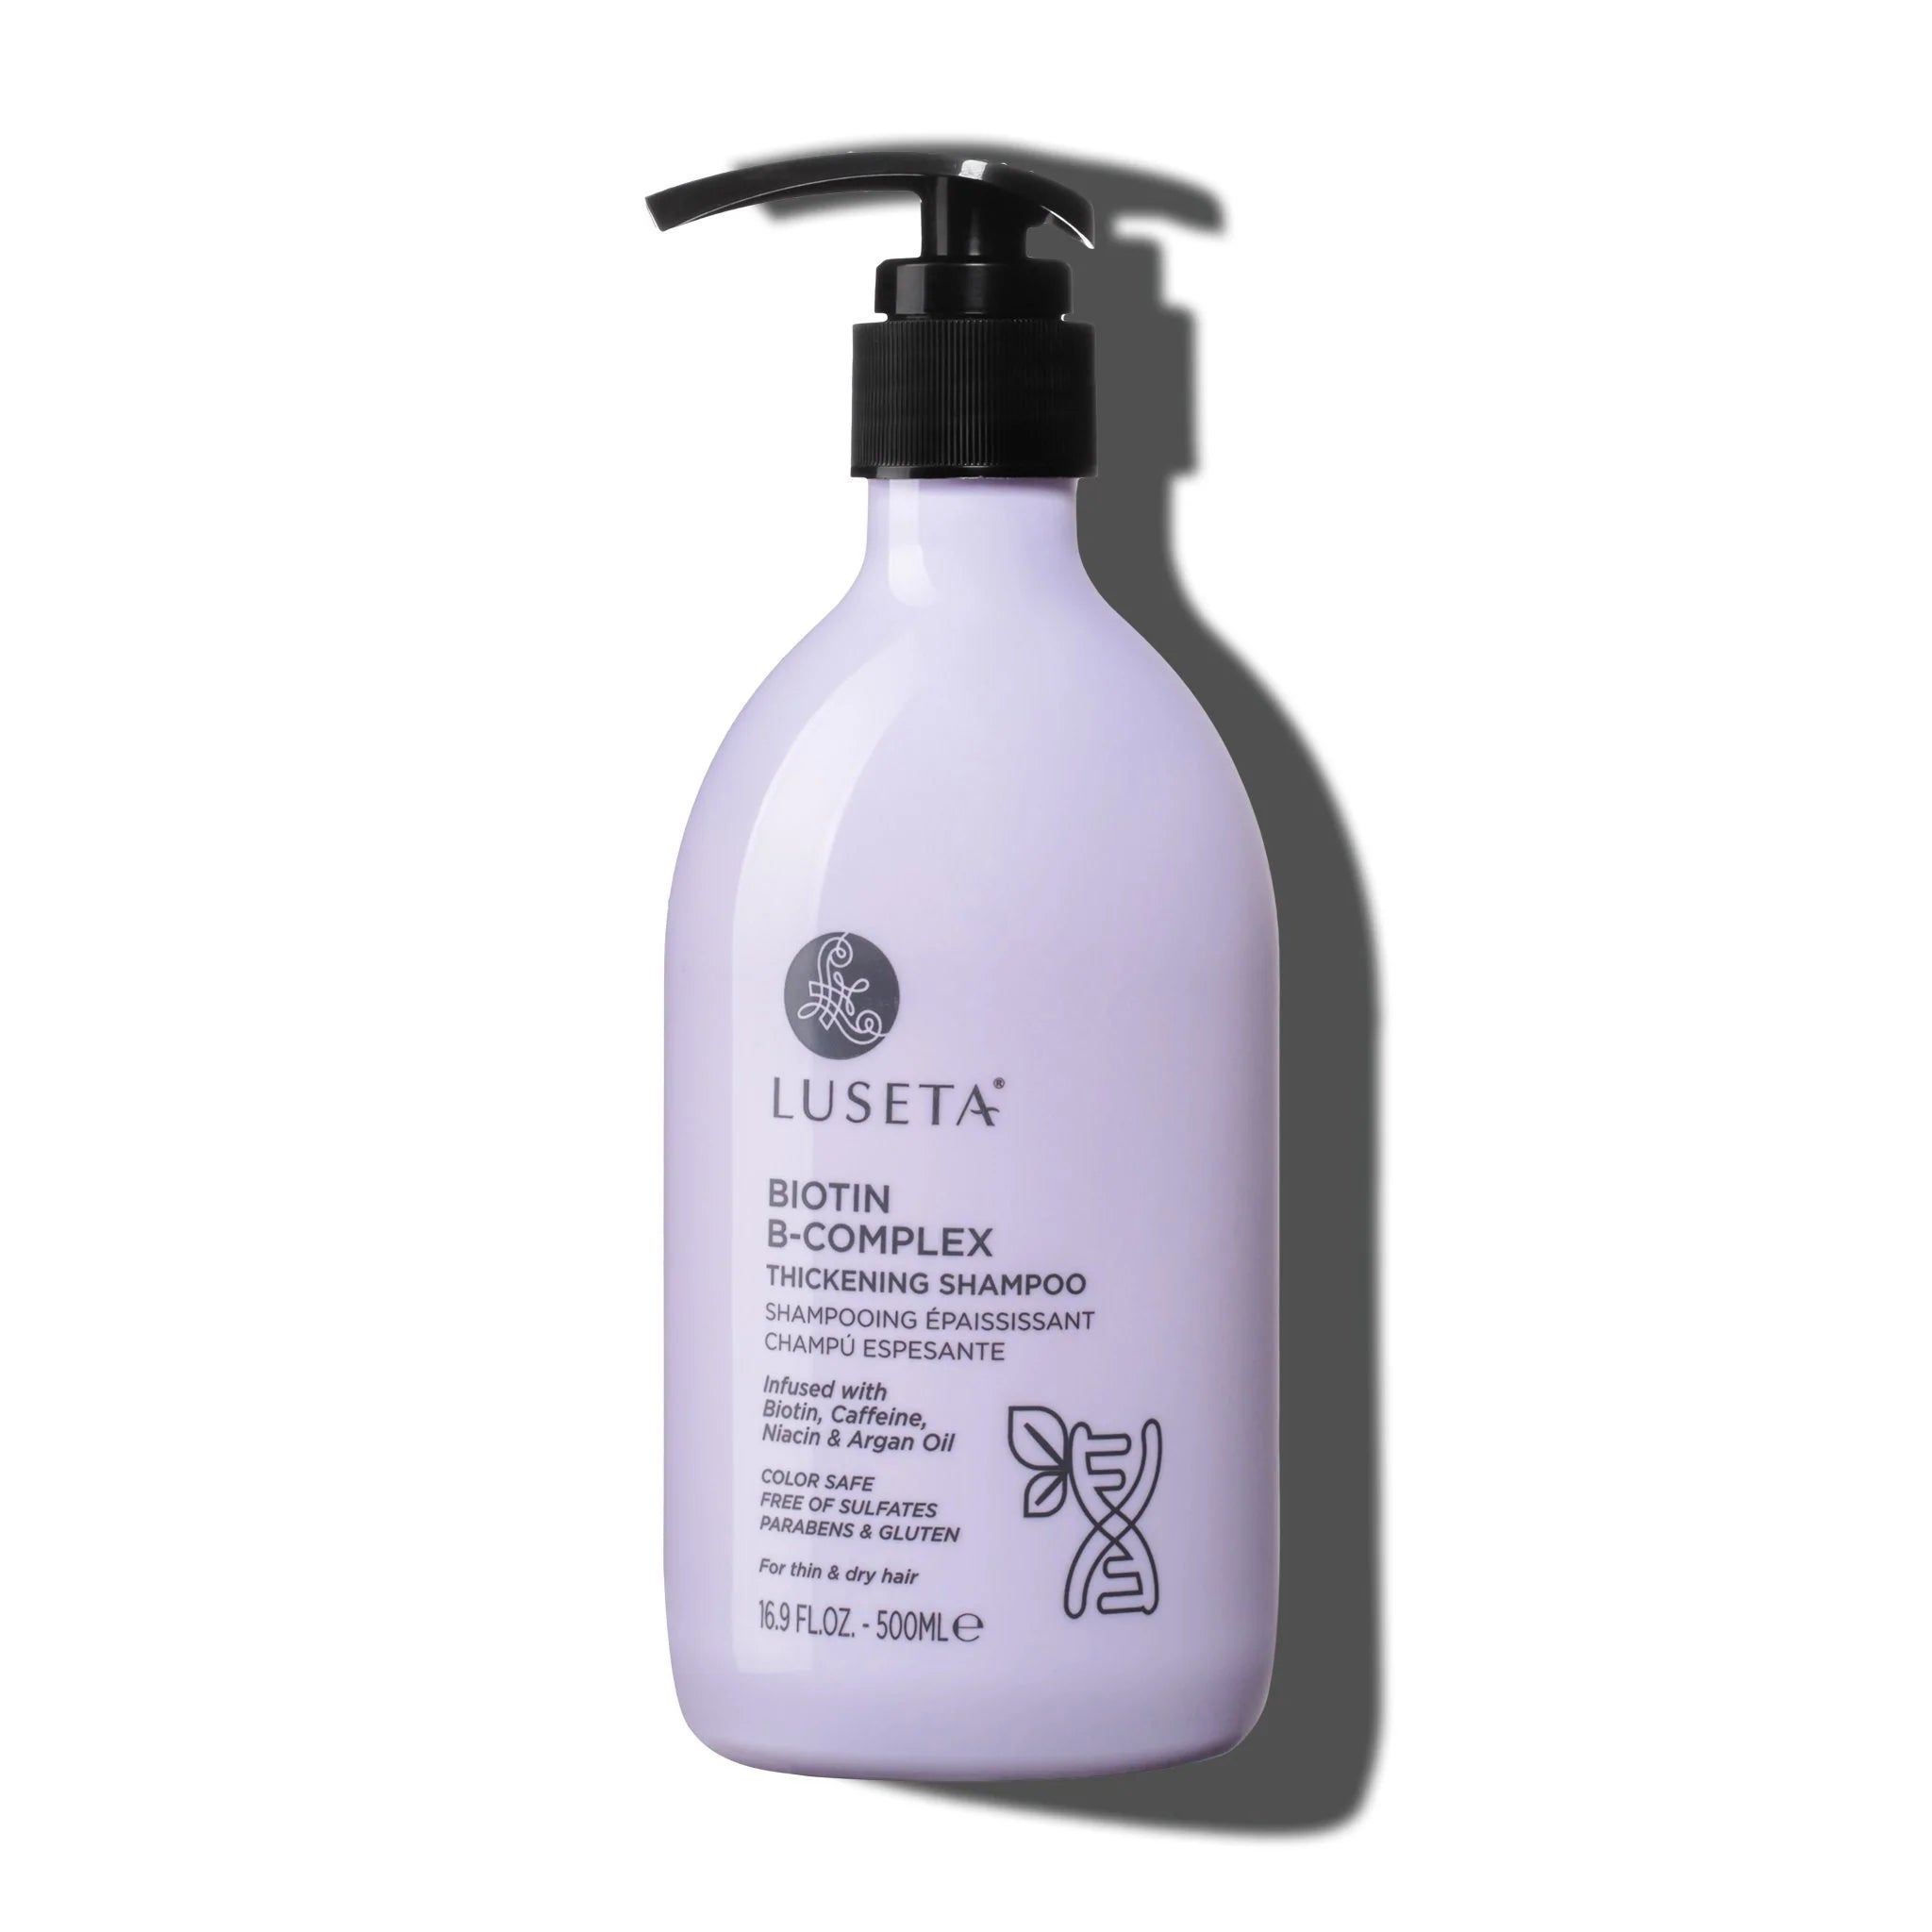 Biotin B-Complex Thickening Shampoo